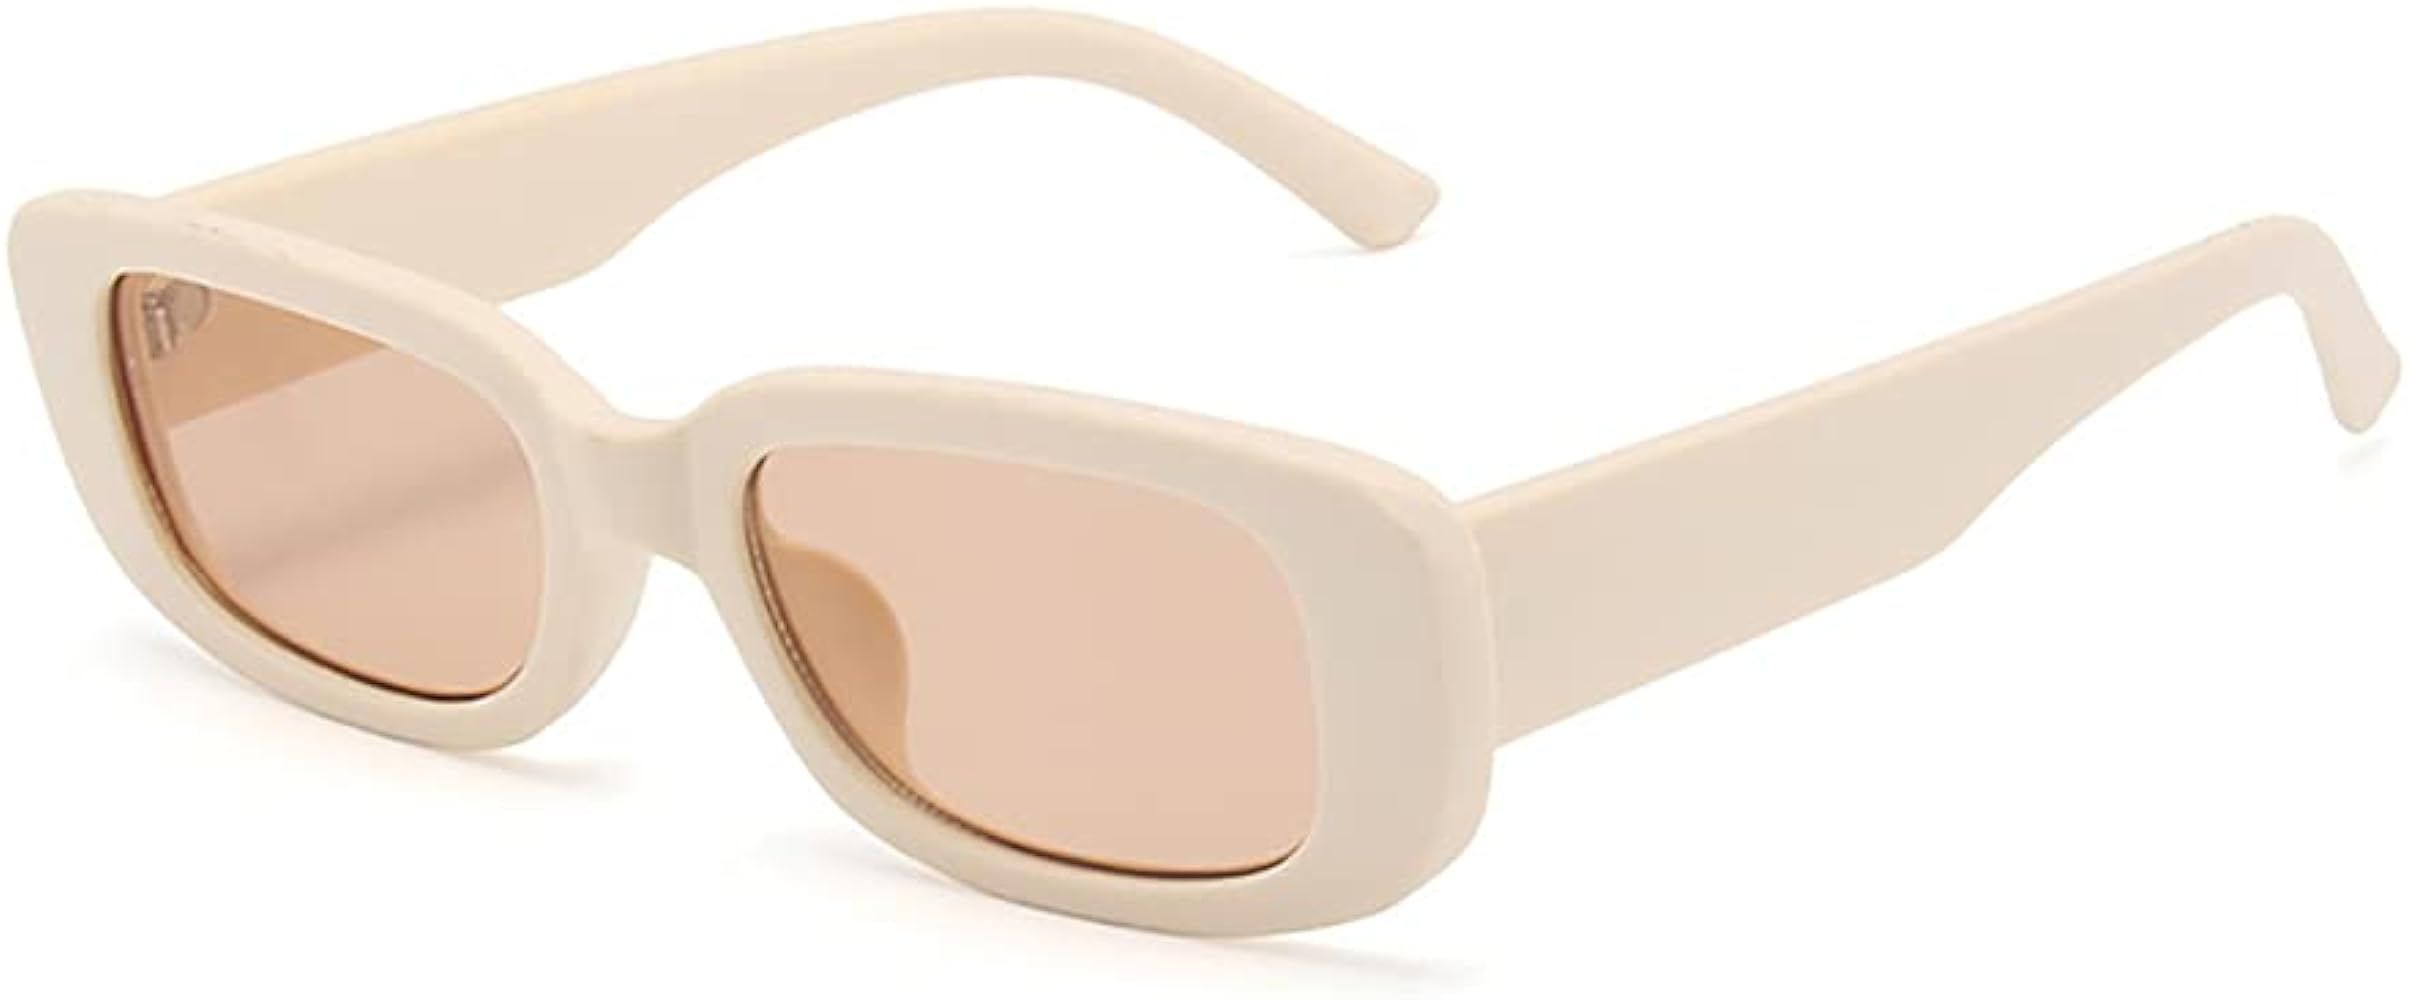 Small Retro Square Sunglasses Women - UV 400 Vintage Rectangle driving, walking, traveling Glasses | Amazon (US)